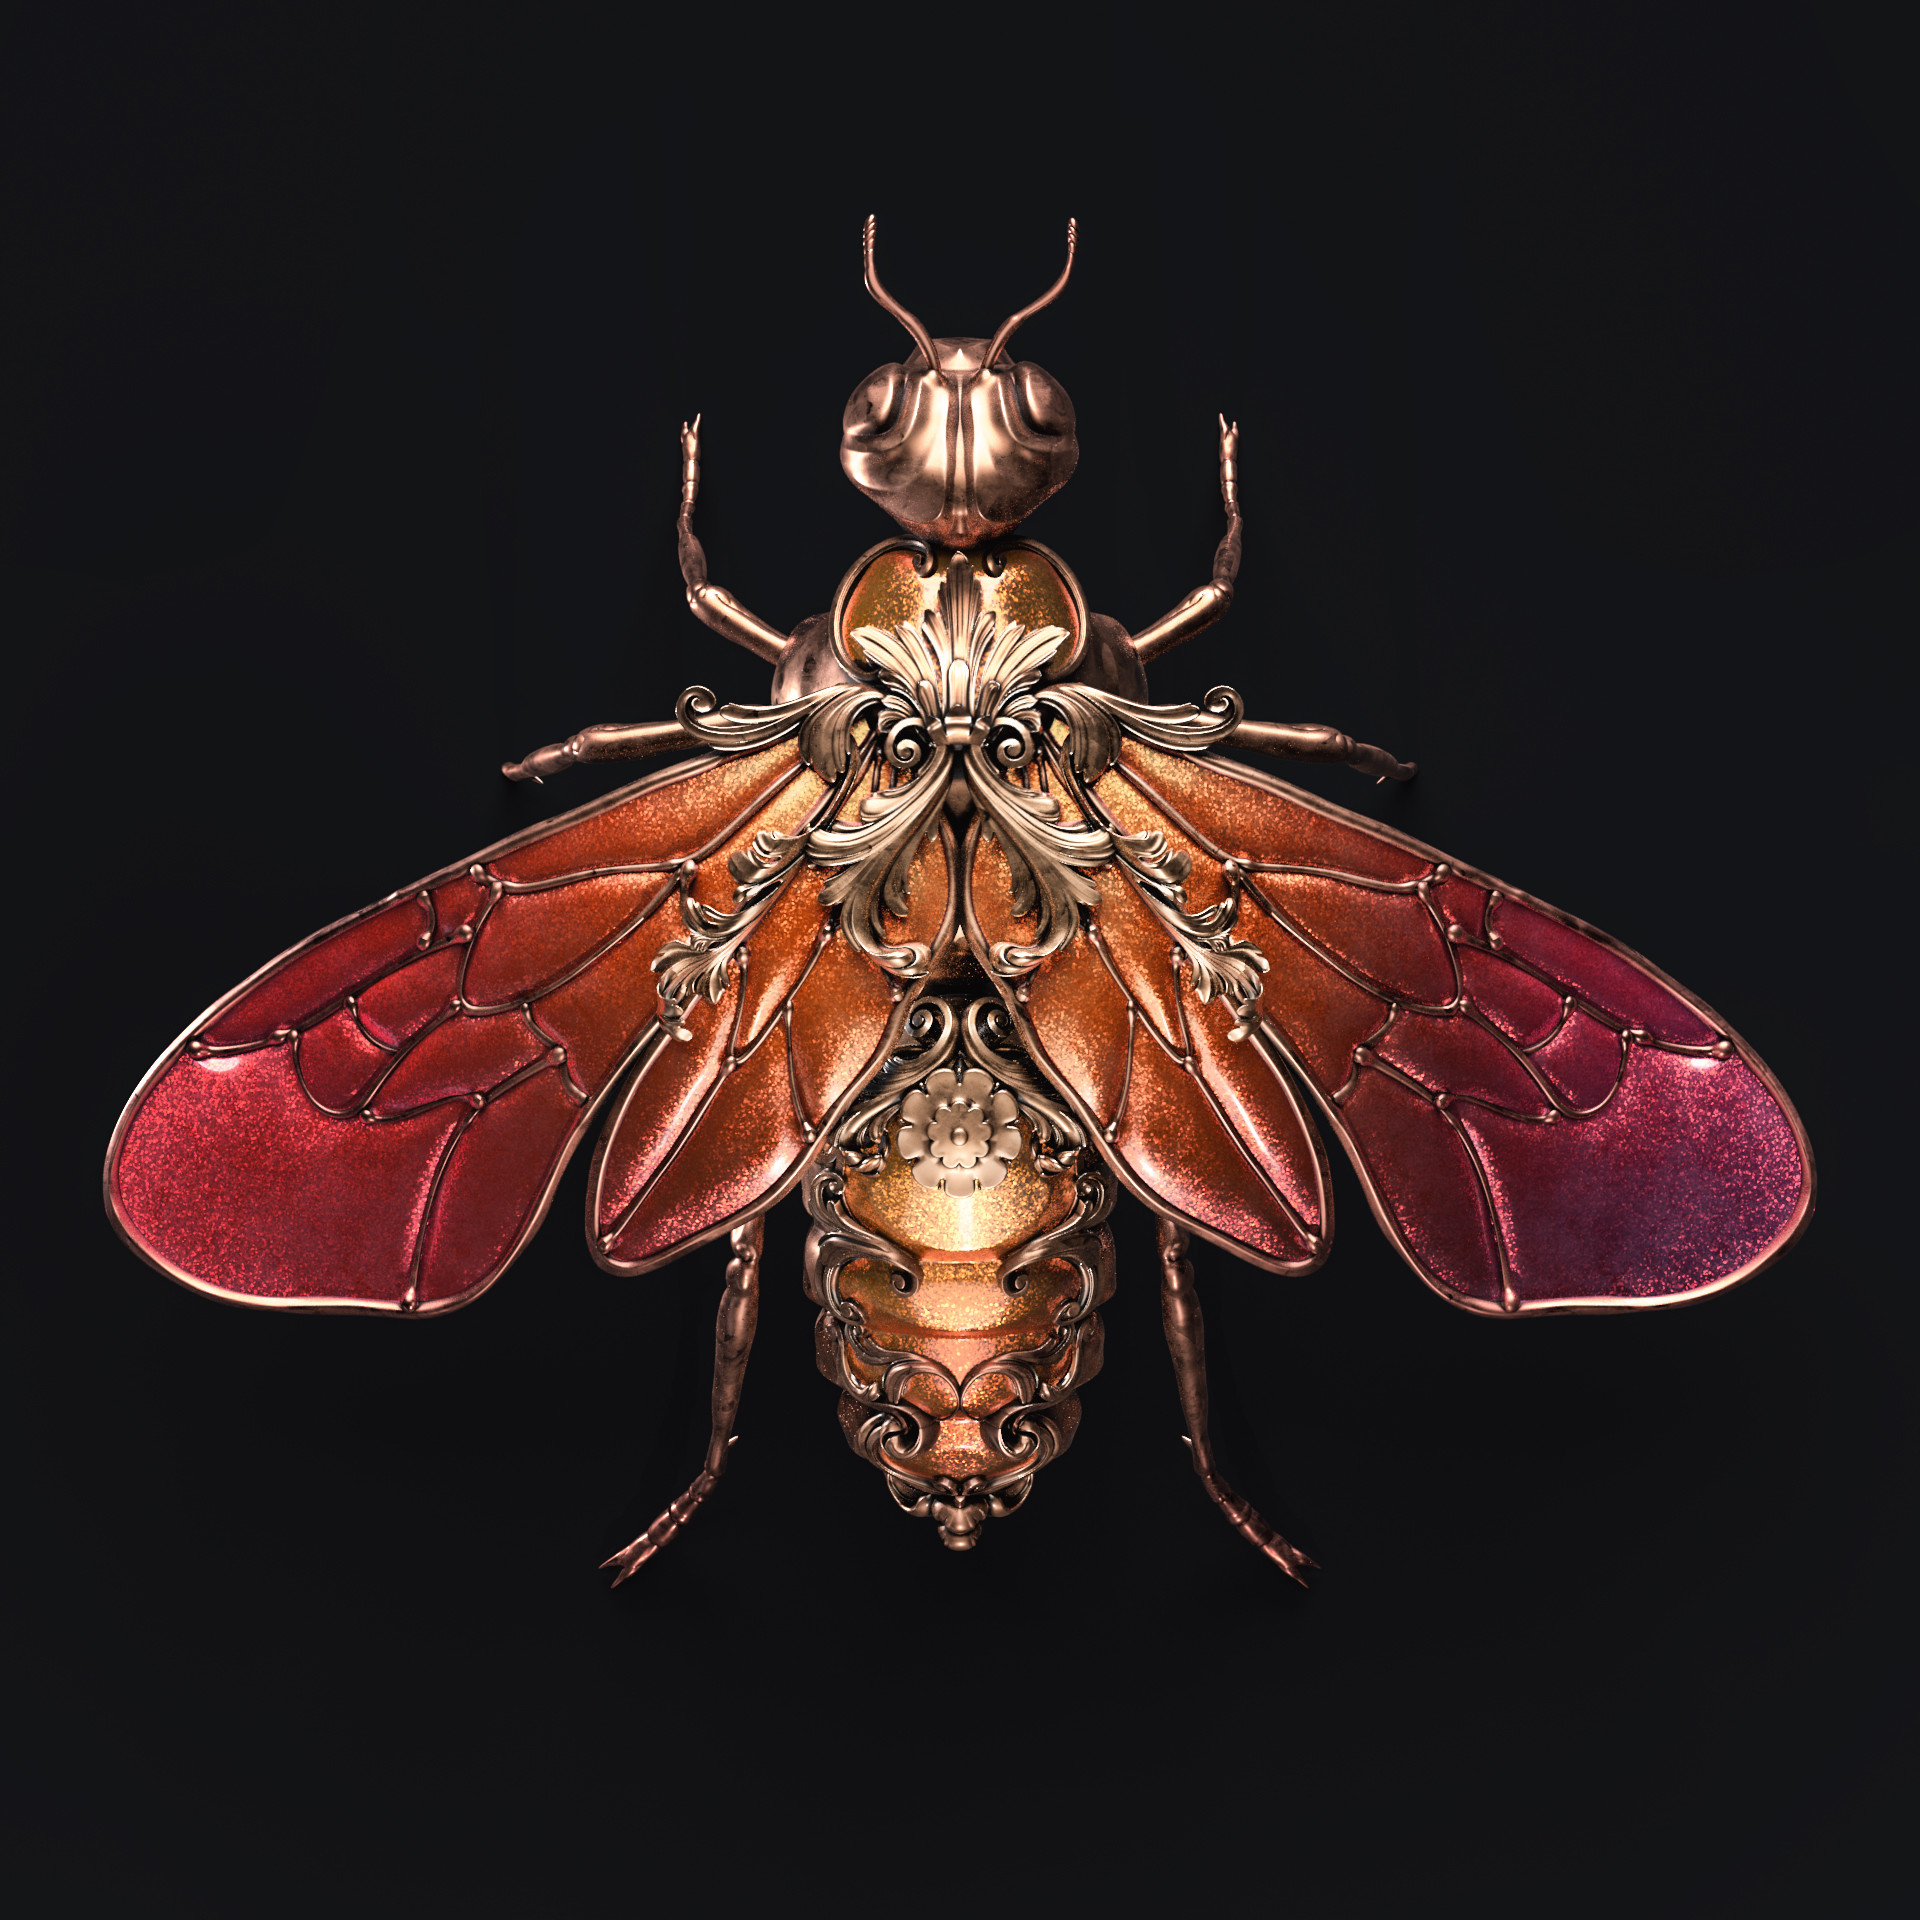 General 1920x1920 Sasha Vinogradova jewel 3D render insect ornamented copper black background